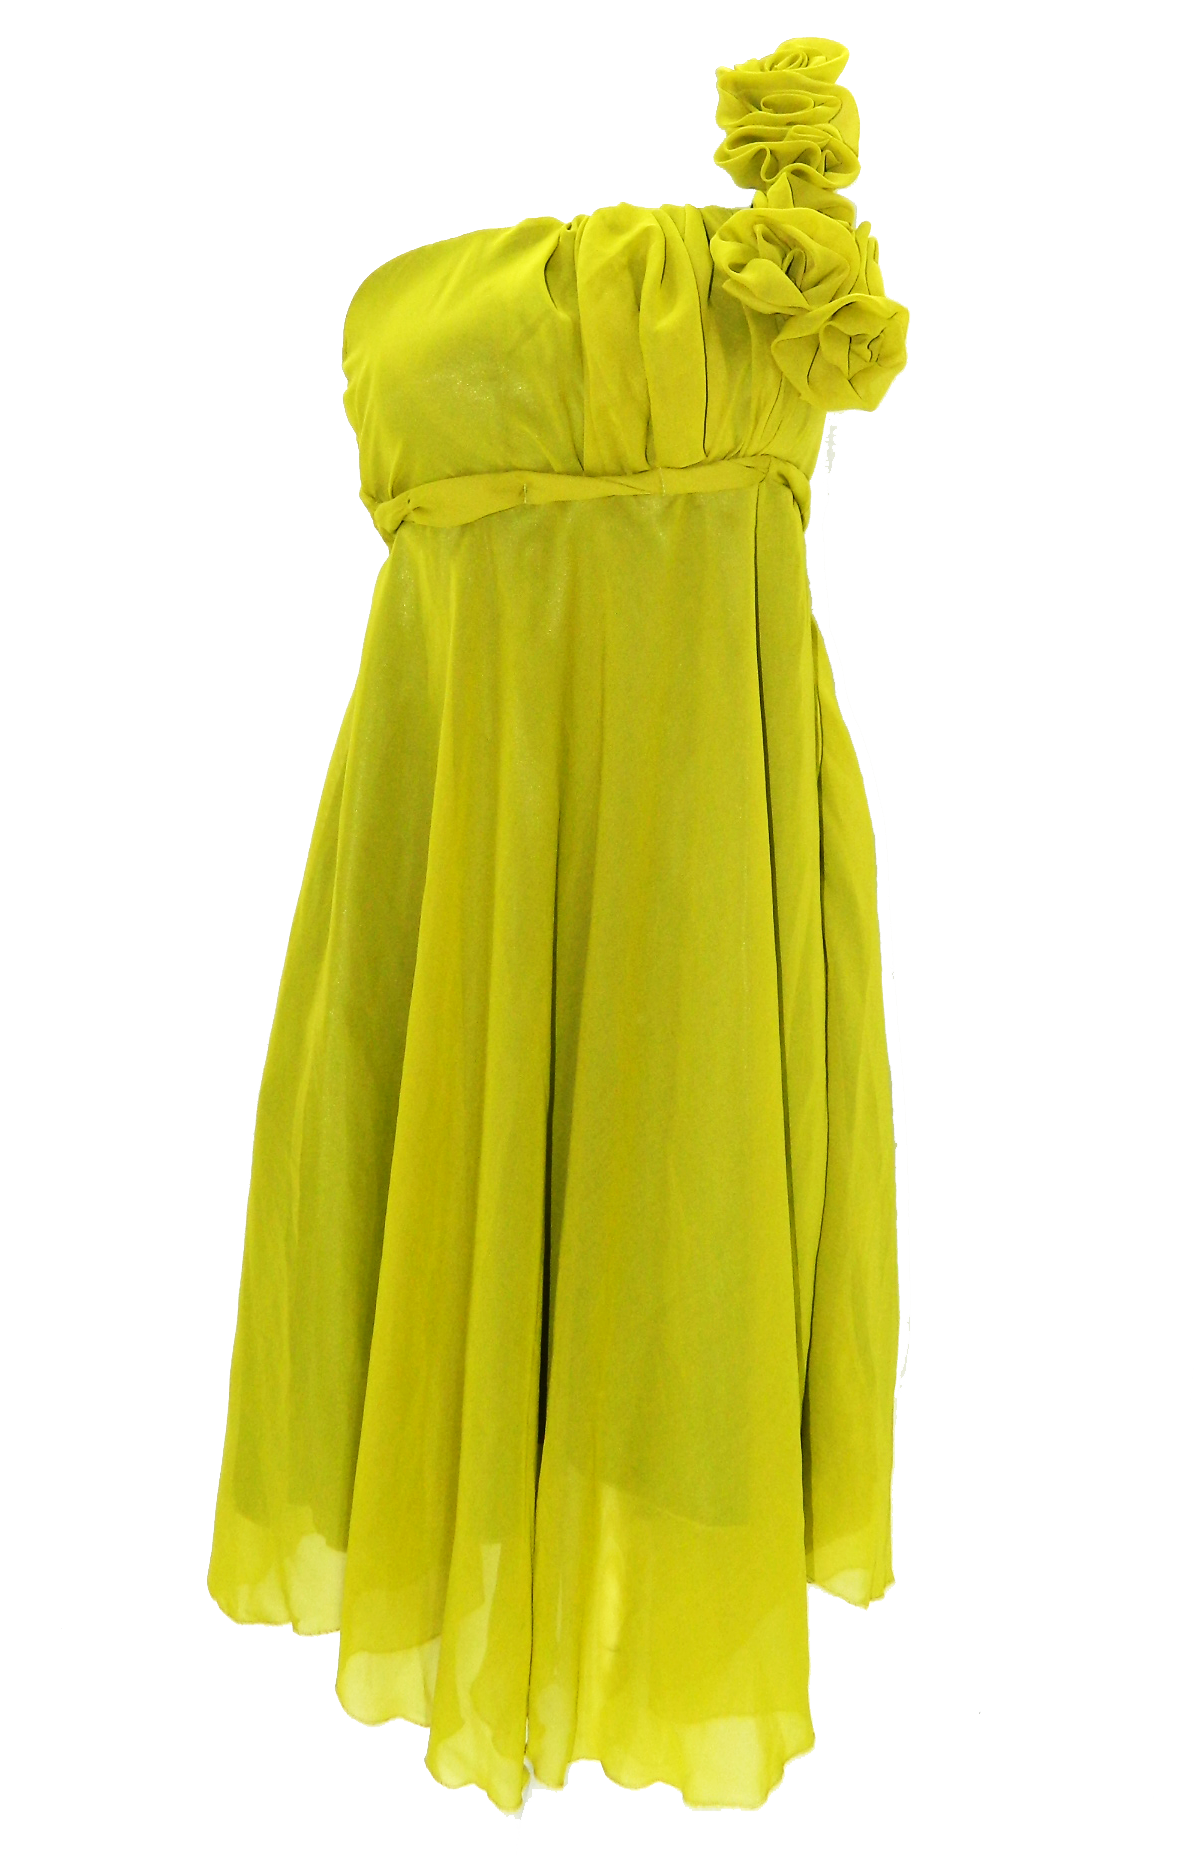 Dresses Png Image #26105 - Dress, Transparent background PNG HD thumbnail